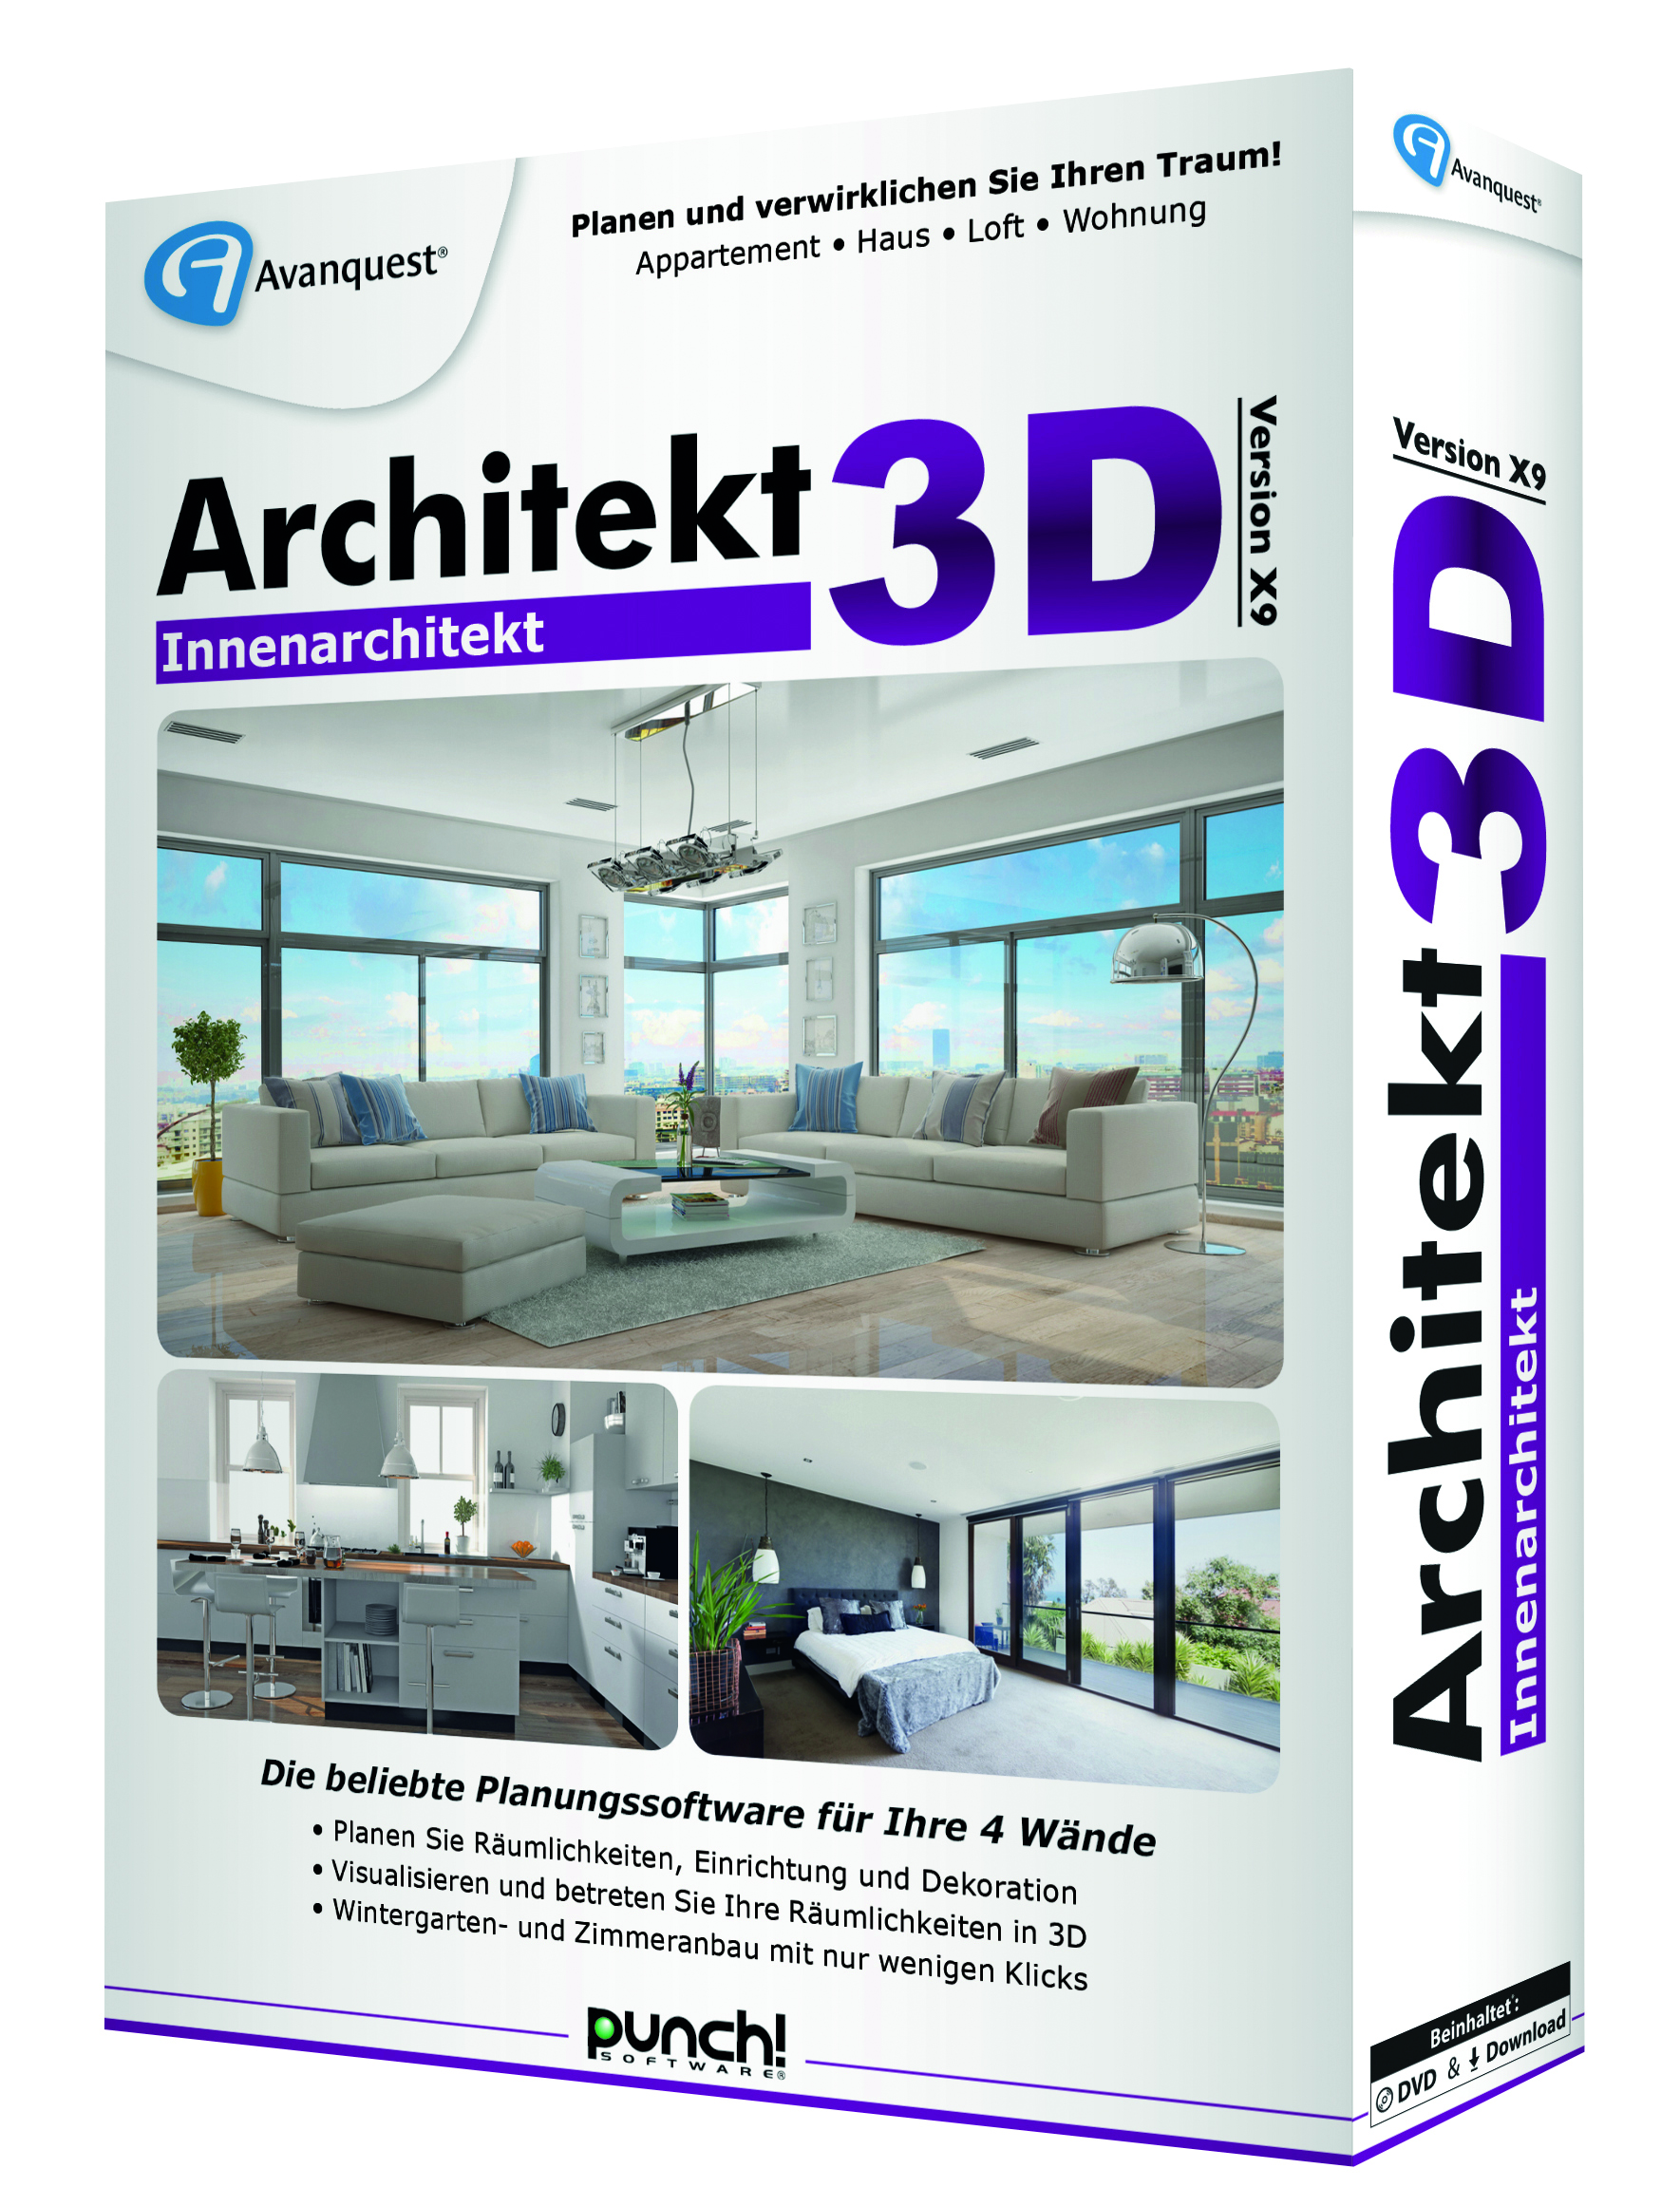 Architekt 3D Innenarchitekt X9 3D rechts 300dpi CMYK